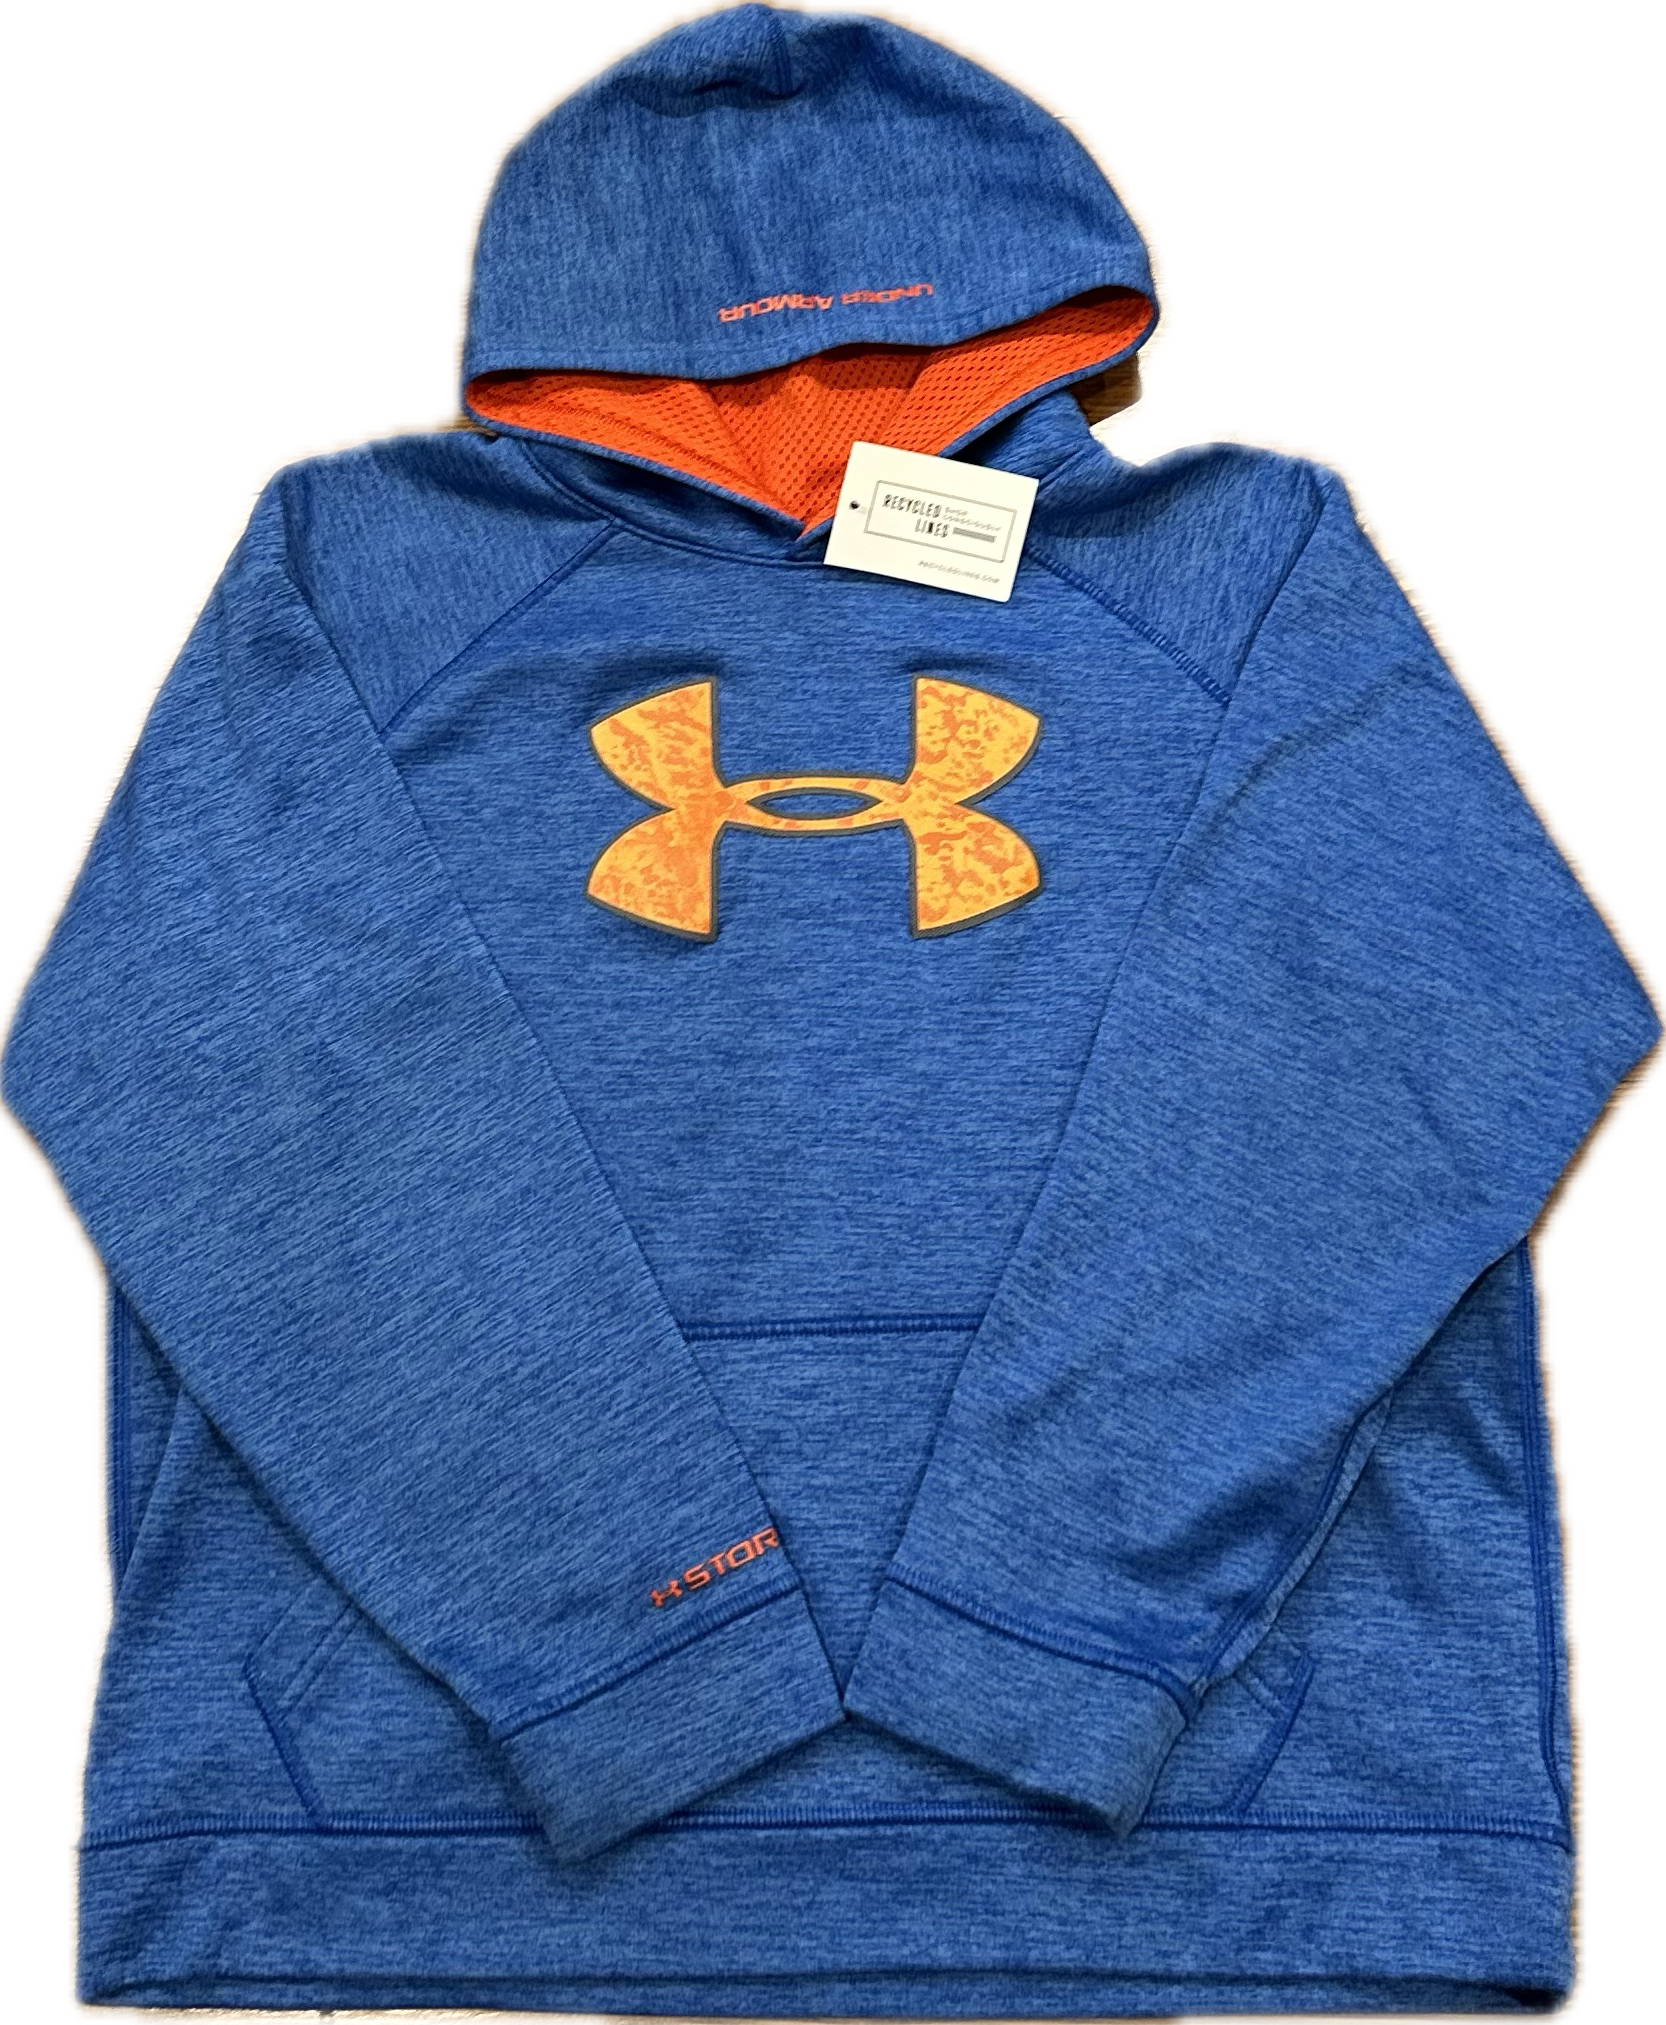 Under Armour Sweatshirt, Blue/Orange Boys Size XL